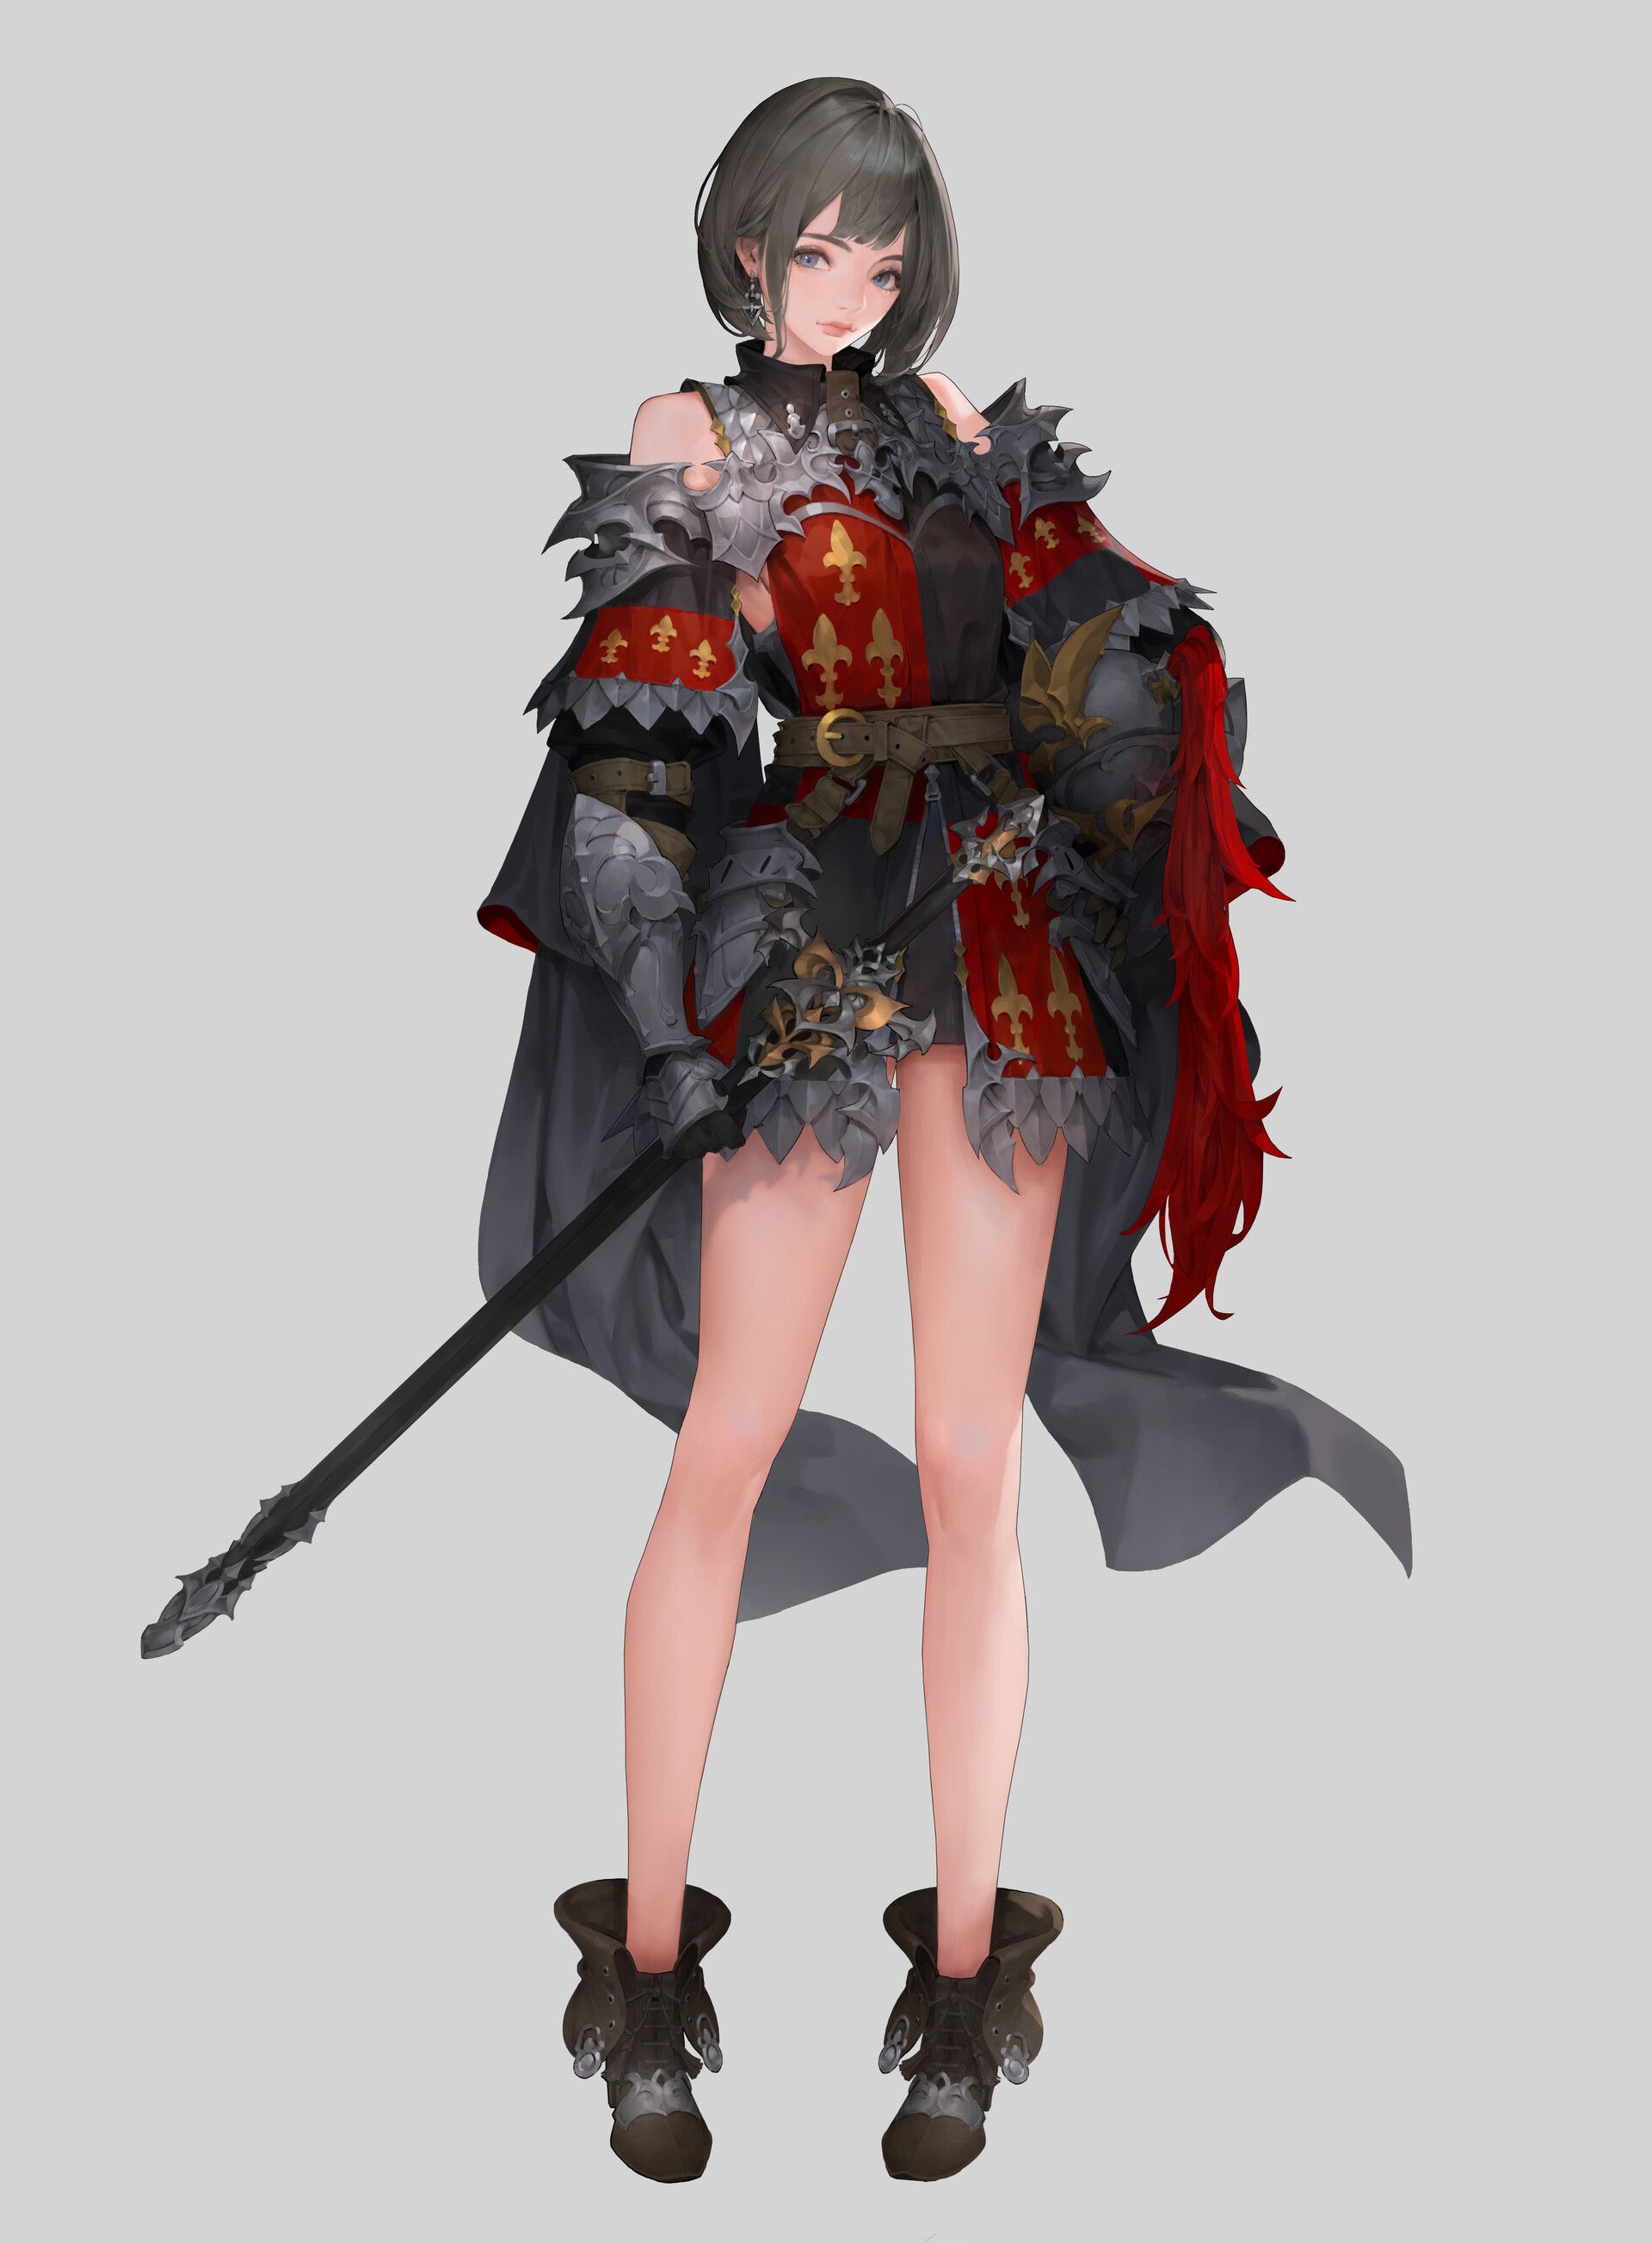 Wallpaper, anime girls, portrait display, original characters, warrior, knight, fantasy armor, fantasy girl 1920x2607